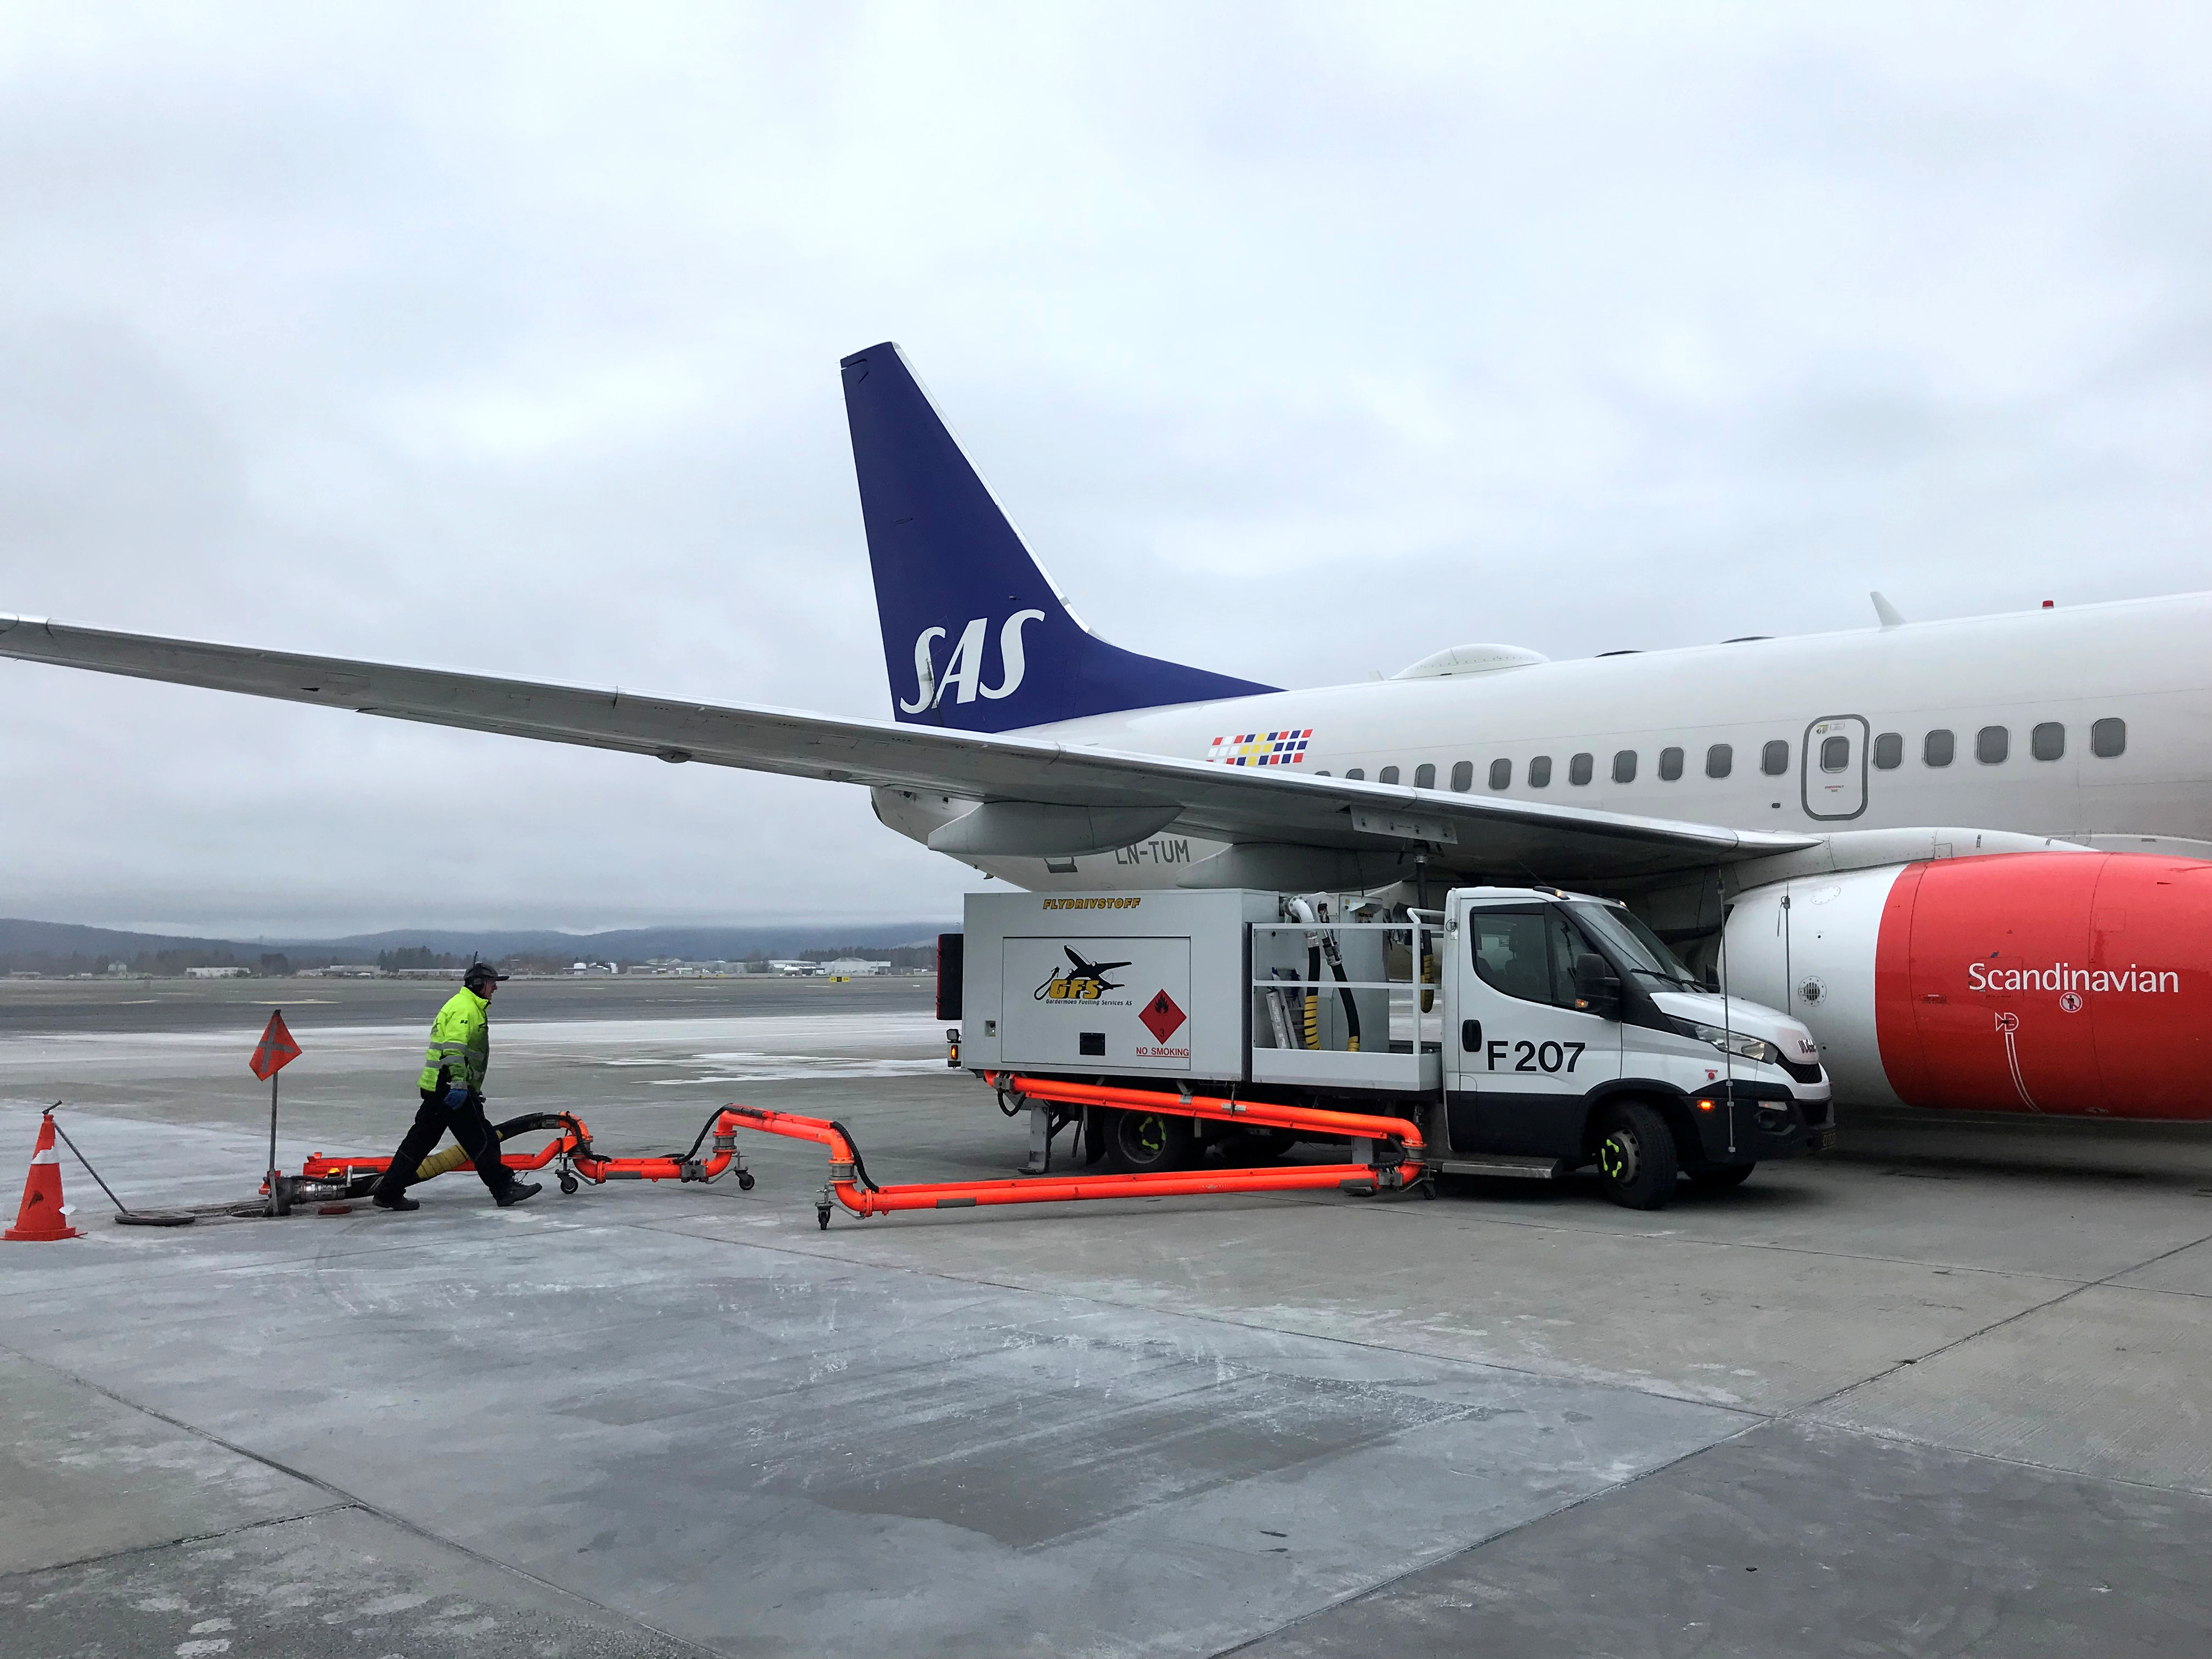 A Scandinavian Airlines (SAS) plane is refuelled at Oslo Gardermoen airport